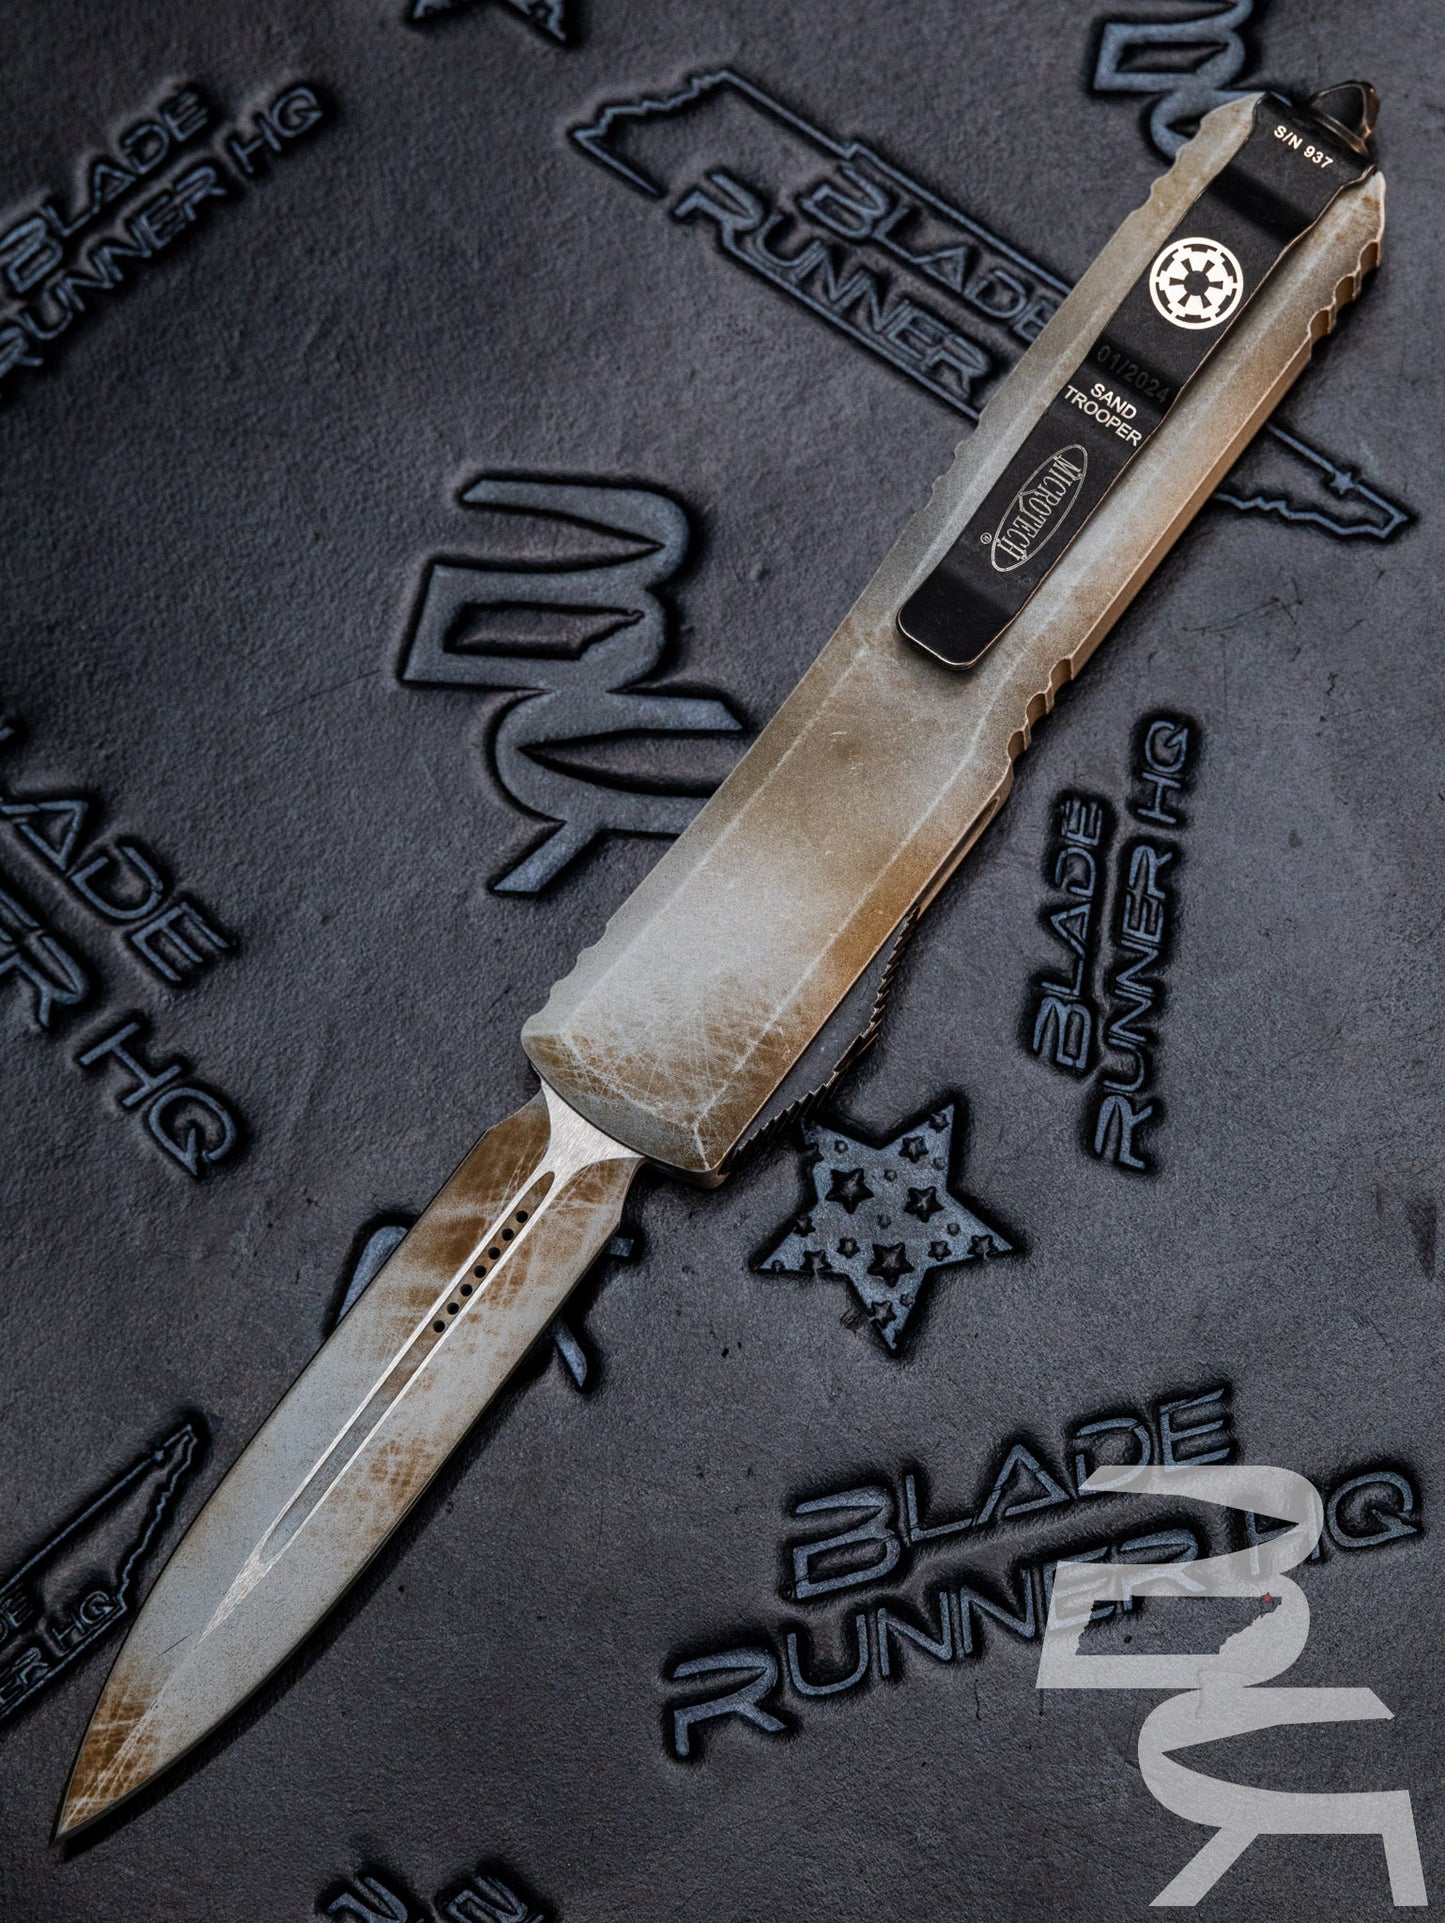 MICROTECH SANDTROOPER ULTRATECH- DOUBLE EDGE OTF KNIFE- PLAIN EDGE BLADE 122-1 SAD